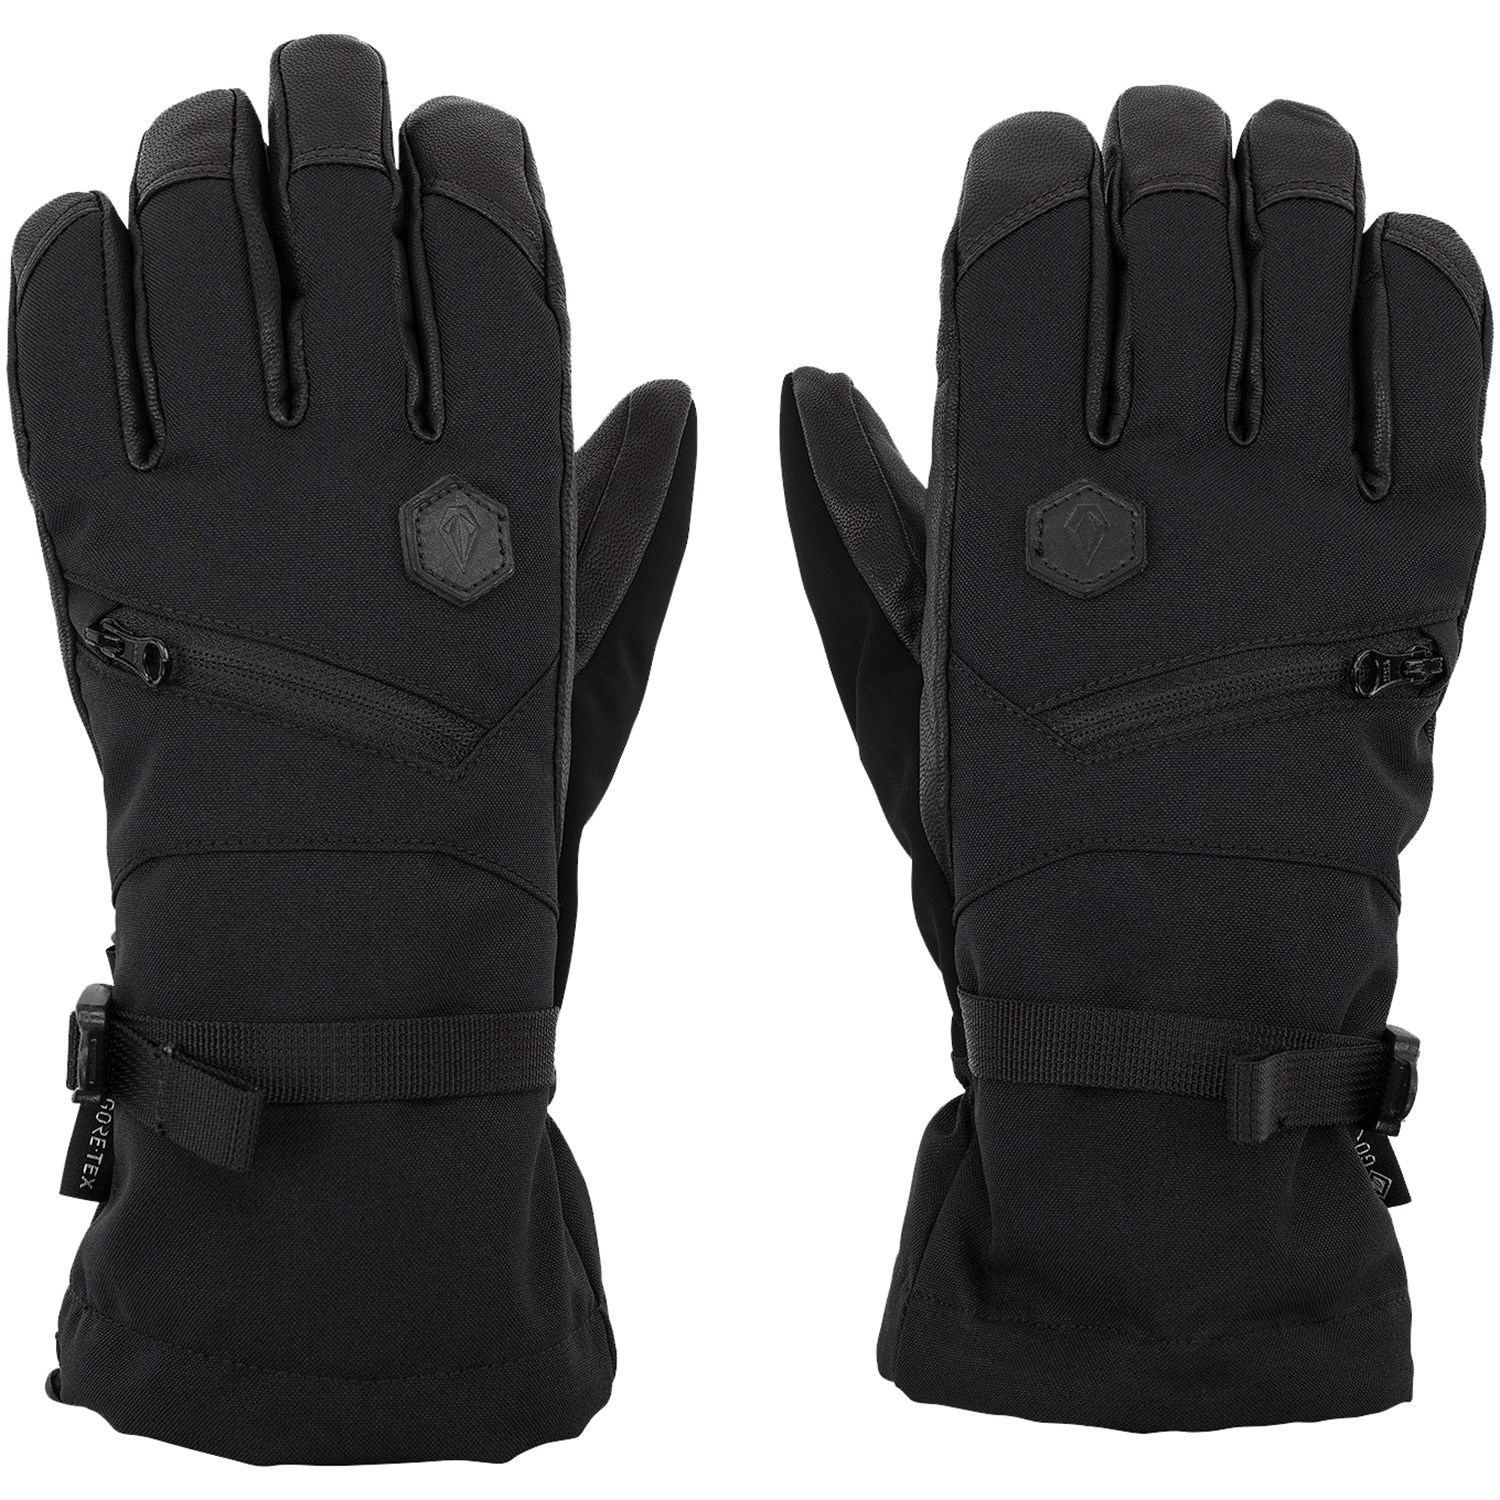 Перчатки Volcom Skye GORE-TEX Over, черный перчатки ссм перчатки игрока hg as v pro gloves sr bk wh